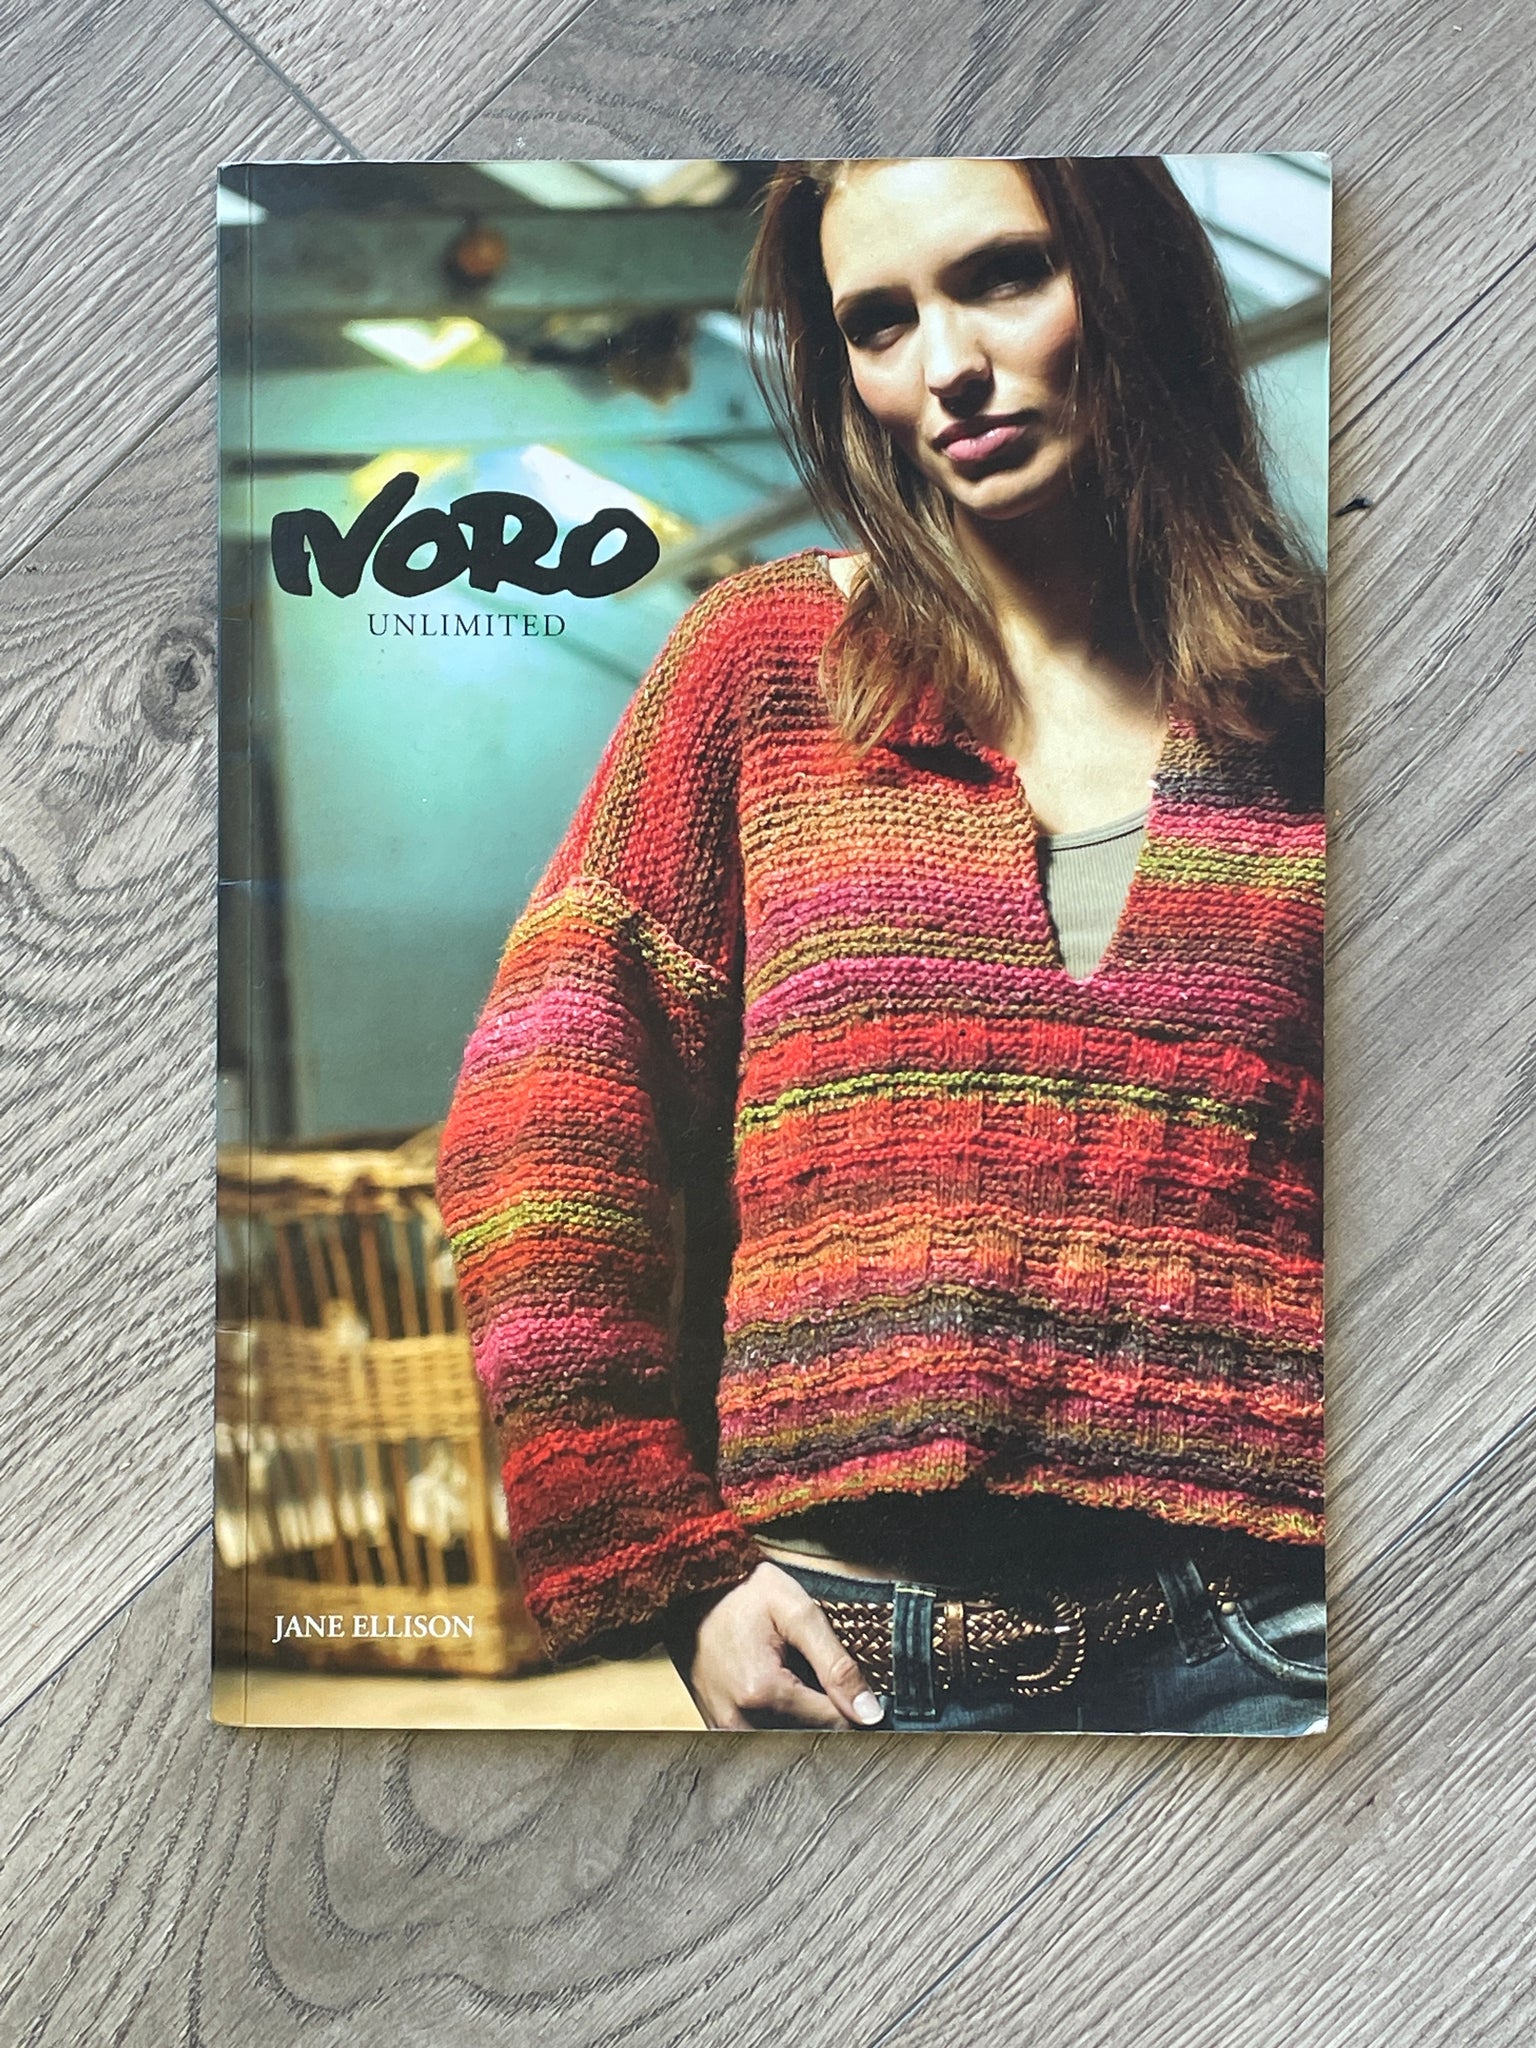 2000's Knitting Magazine Bundle - "Noro Unlimited"